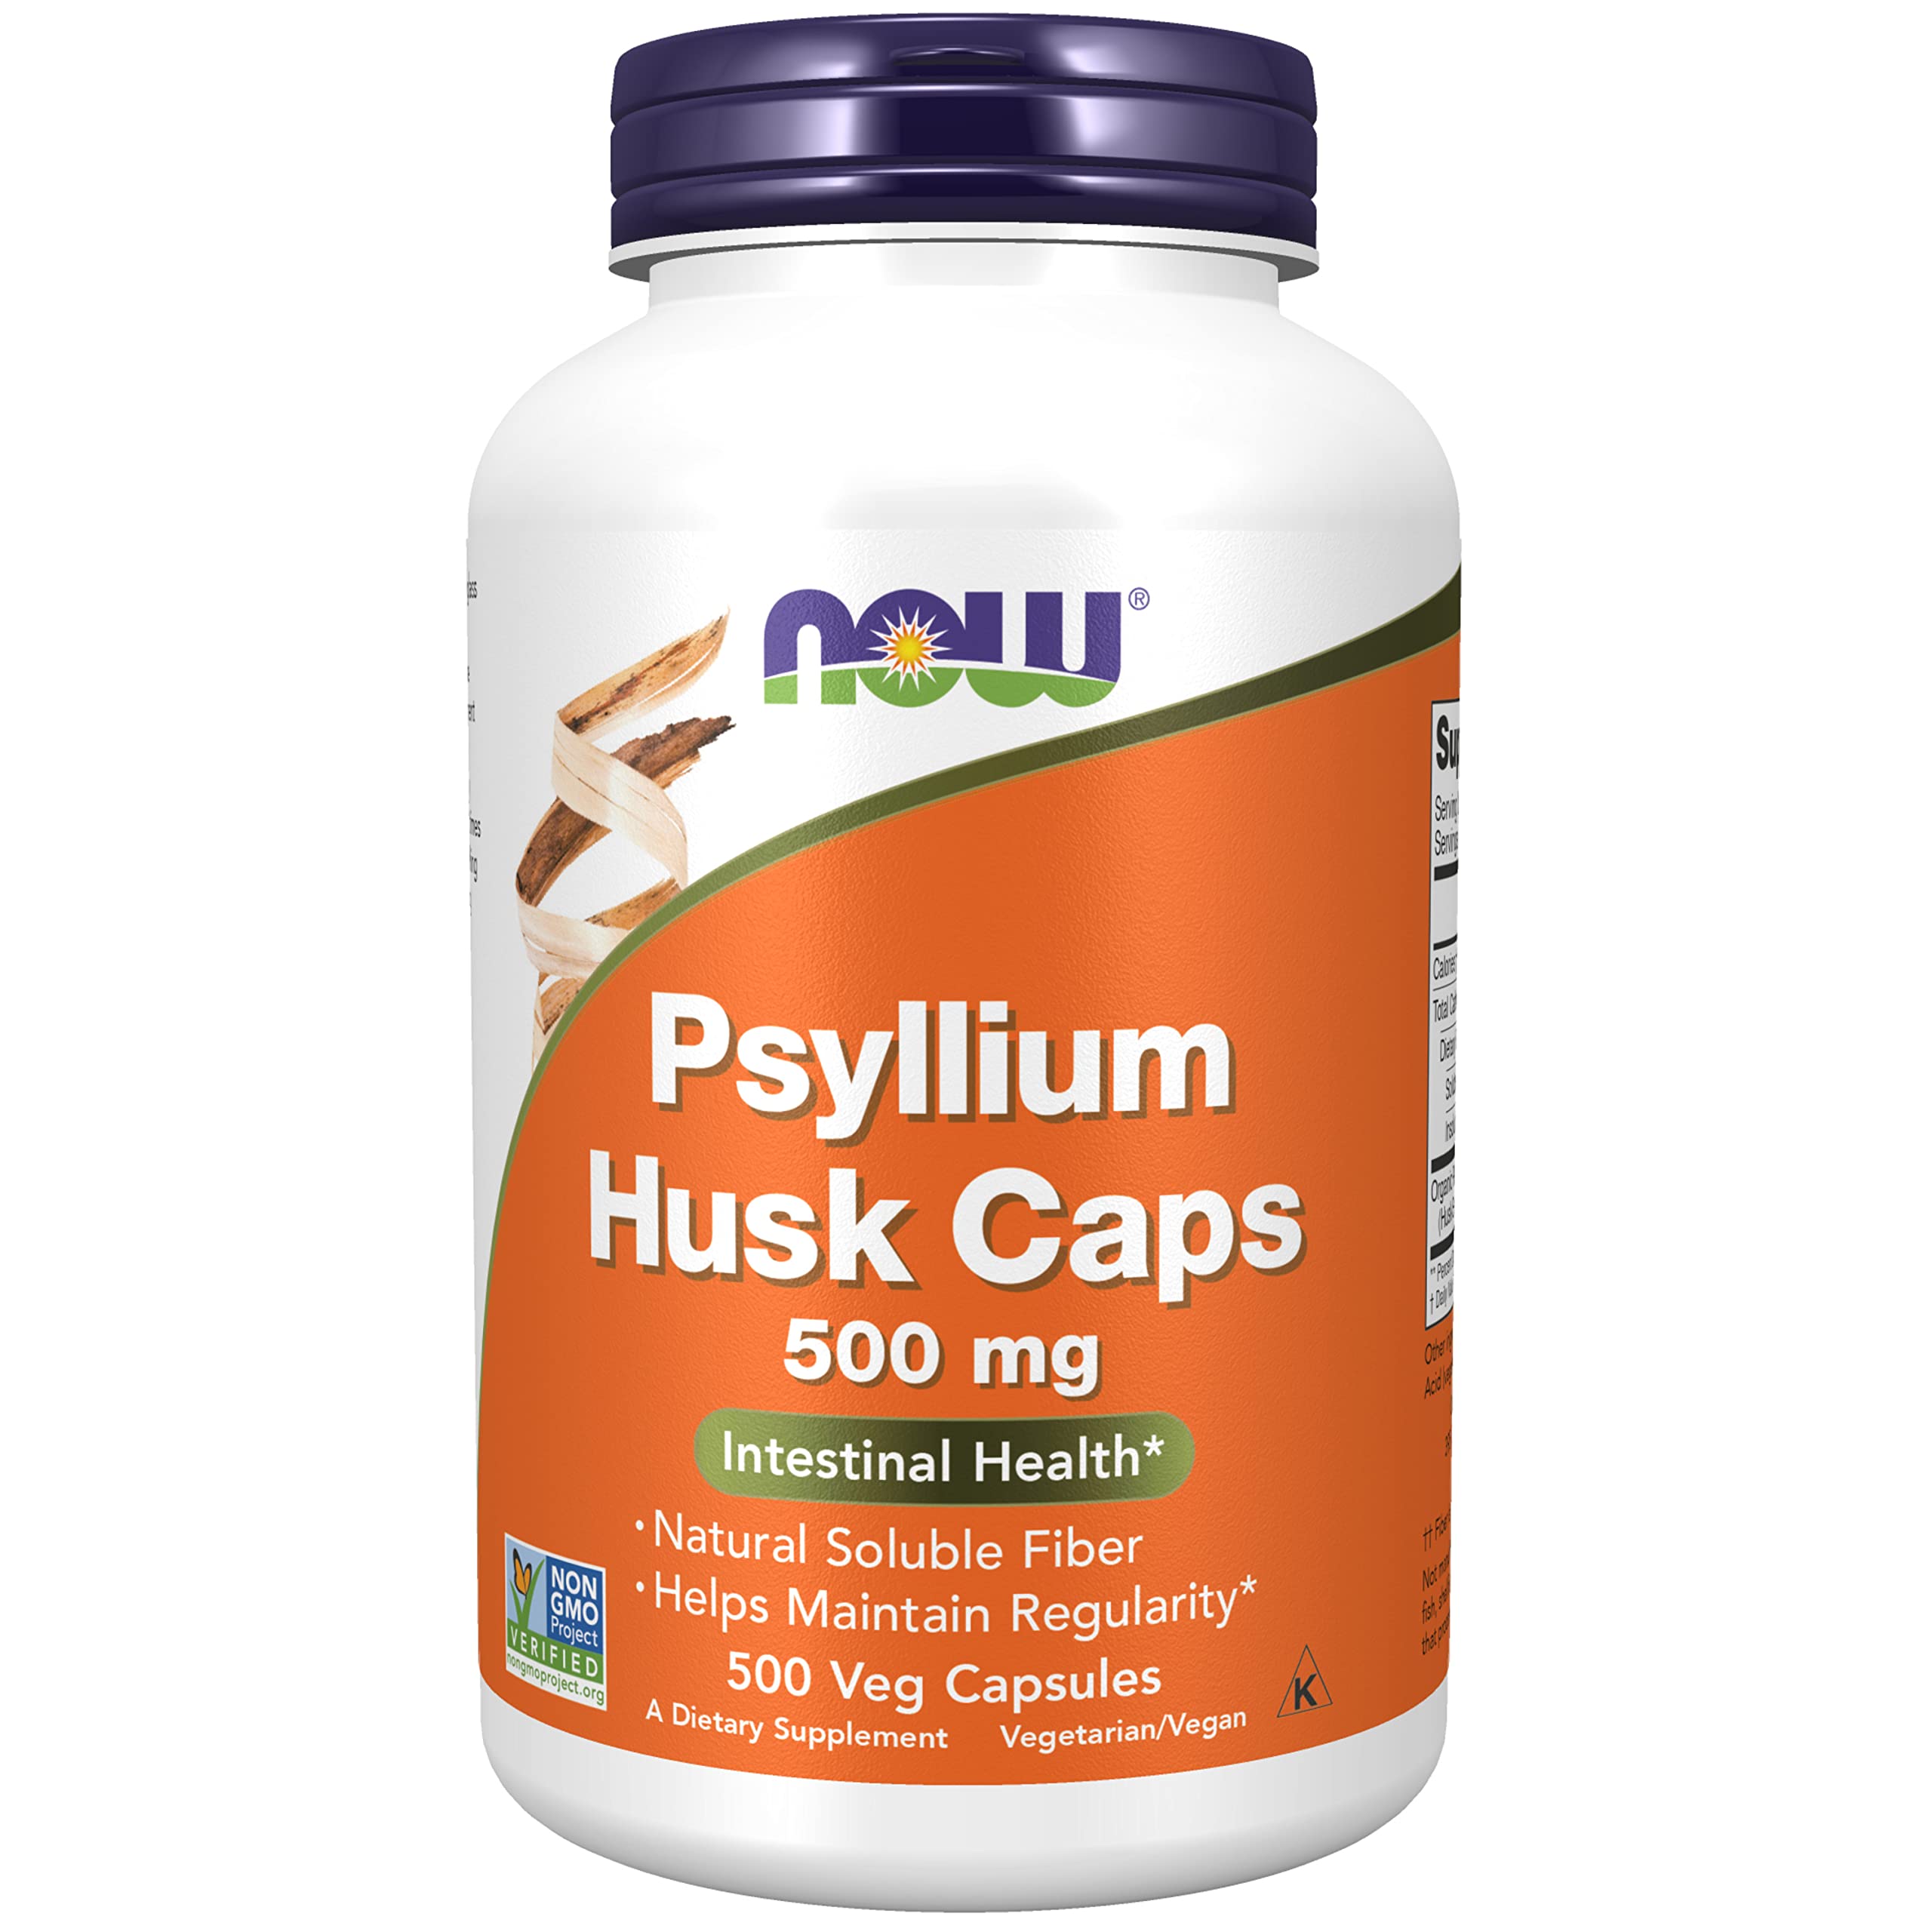 NOW Supplements, Psyllium Husk Caps 500 mg, Non-GMO Project Verified, Natural Soluble Fiber, Intestinal Health*, 500 Veg Capsules